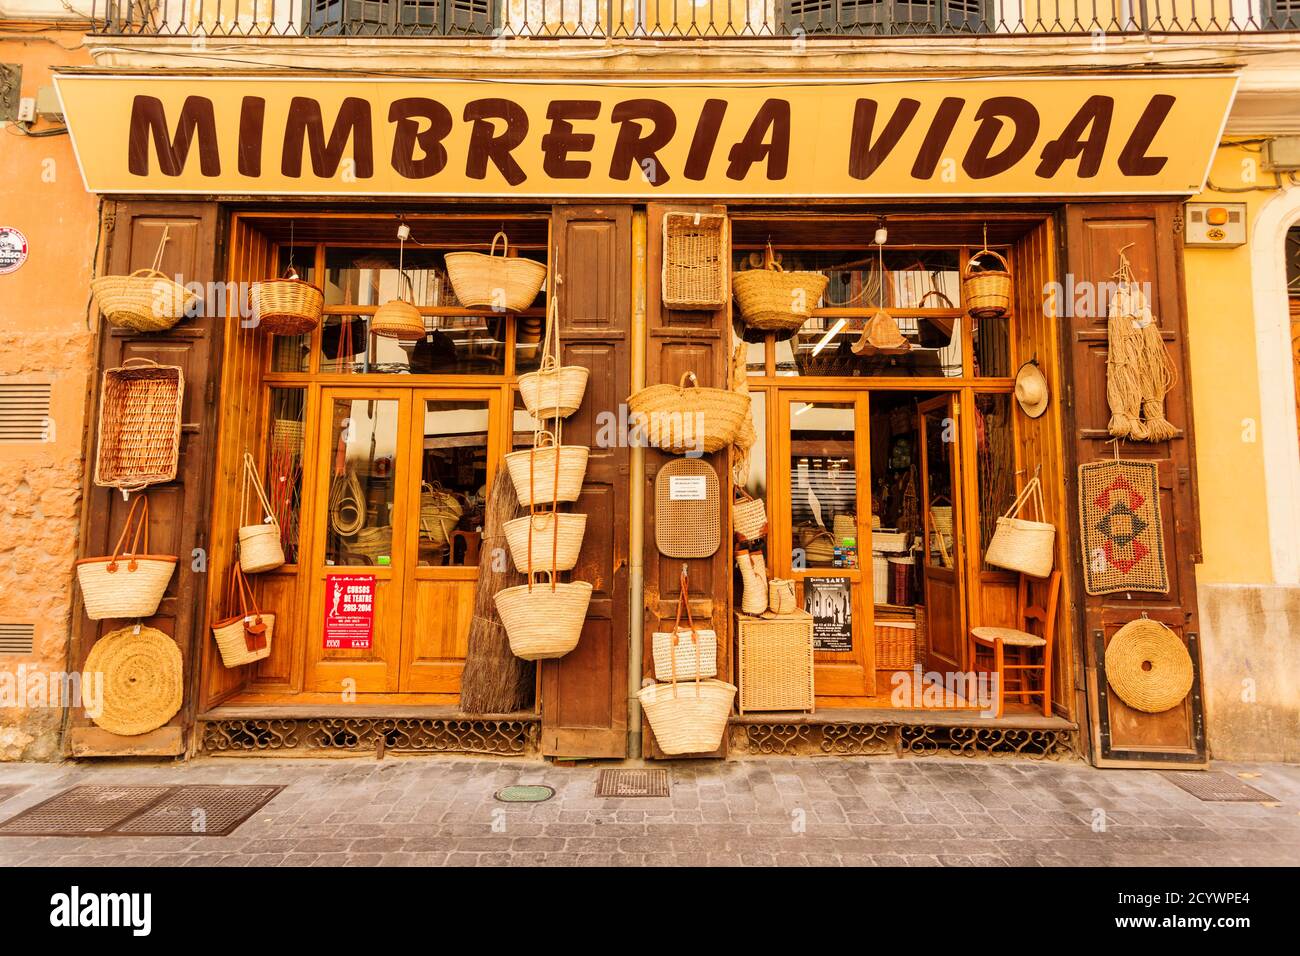 Mimbreria Vidal, Palma, mallorca, isole balneari, spagna, europa Foto Stock